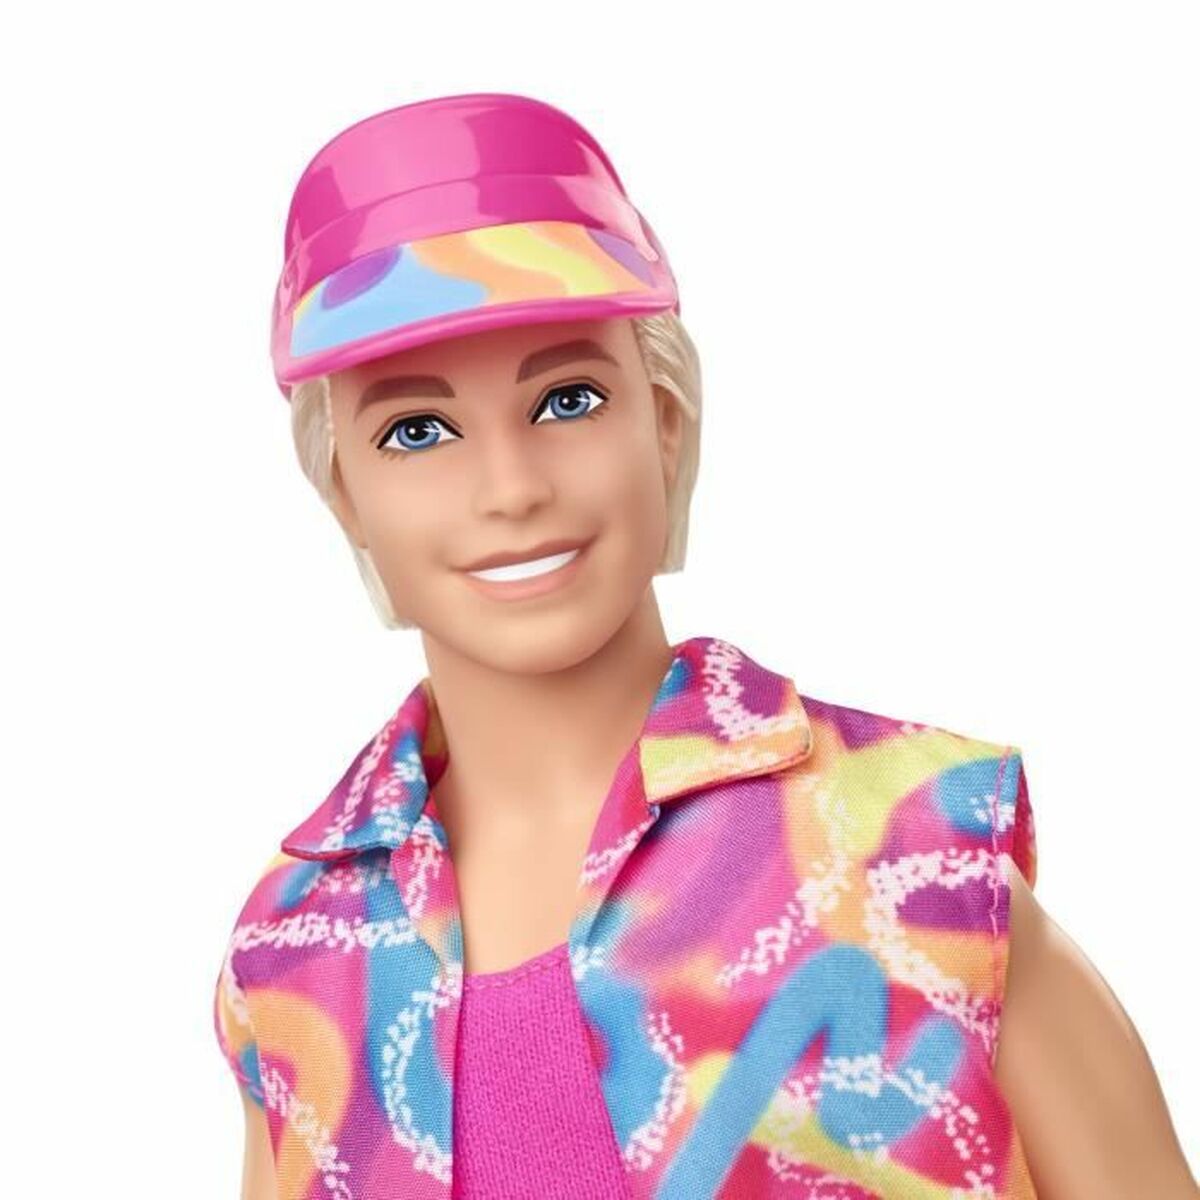 Куколка Barbie The movie Ken roller skate